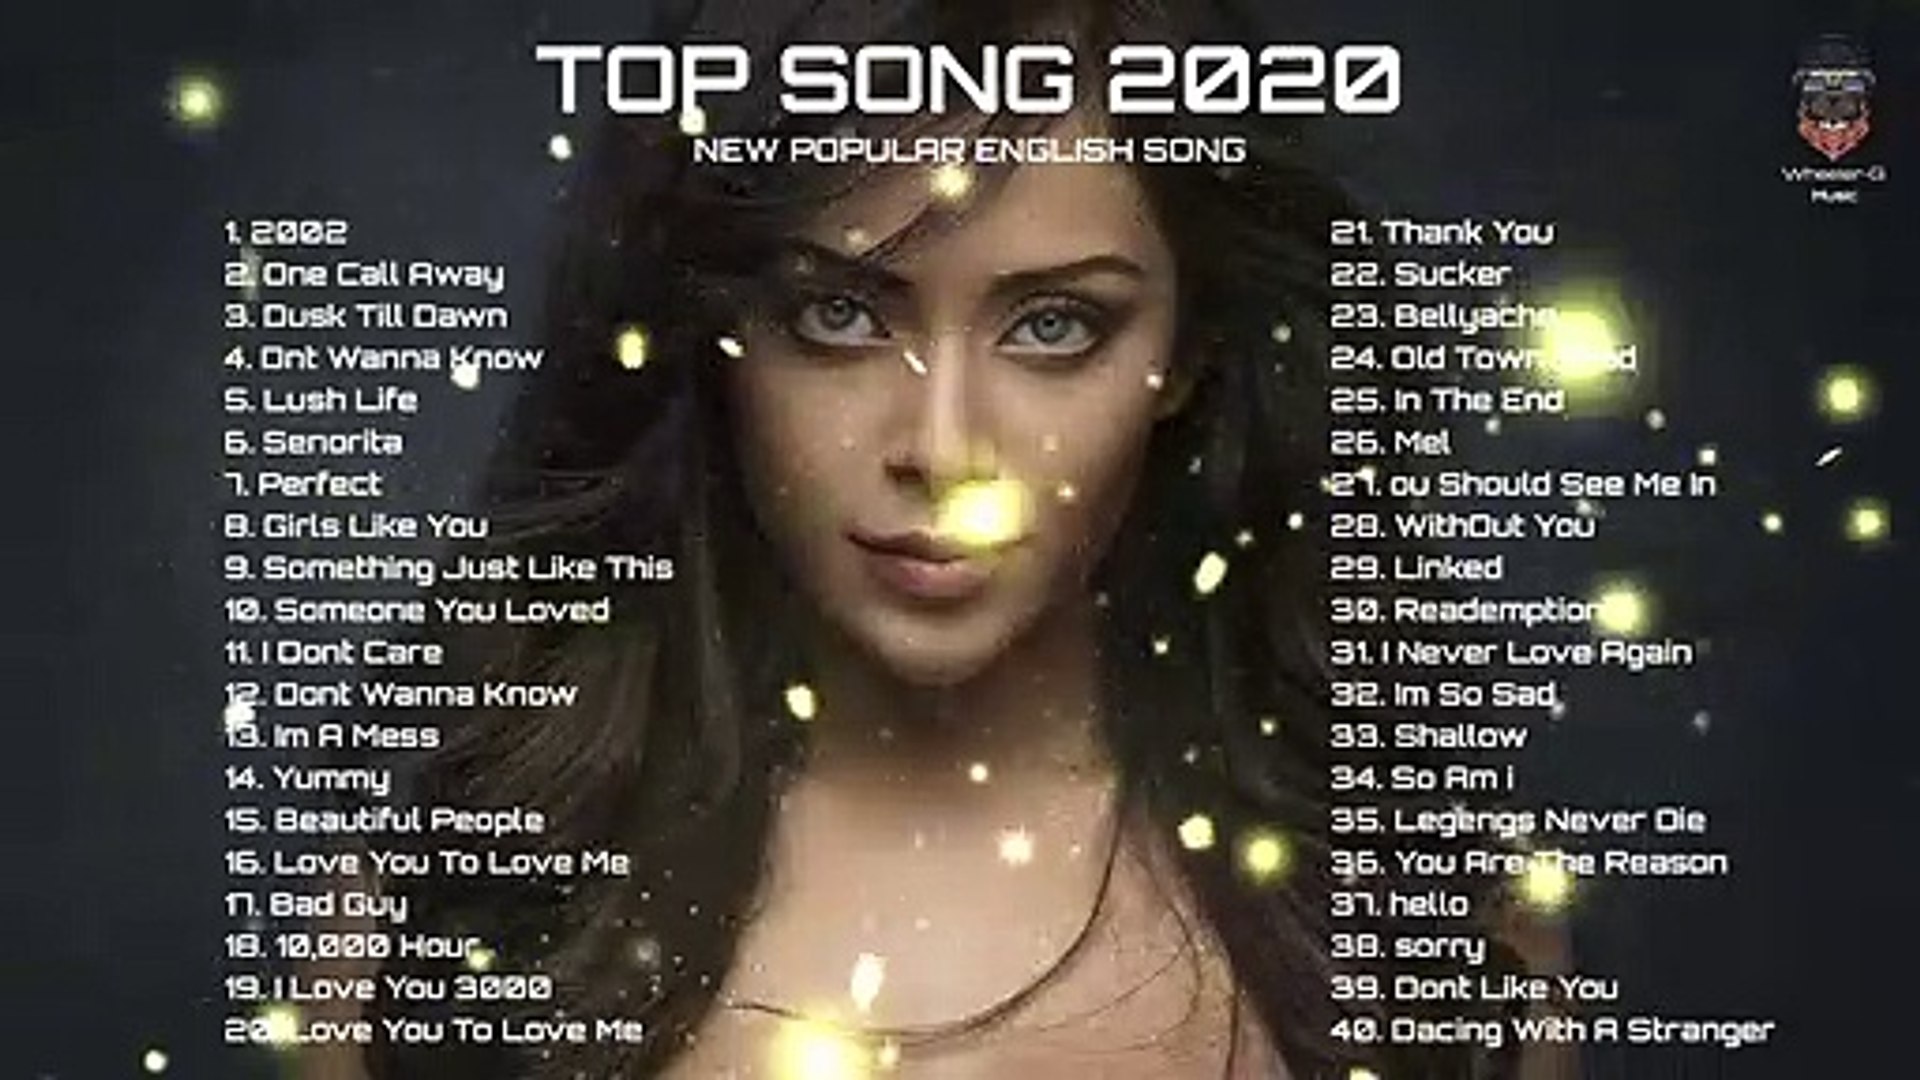 Music Top 50 Song - Music Billboard - Music Top Songs 2020 [Wheeler-G] (1)_Trim